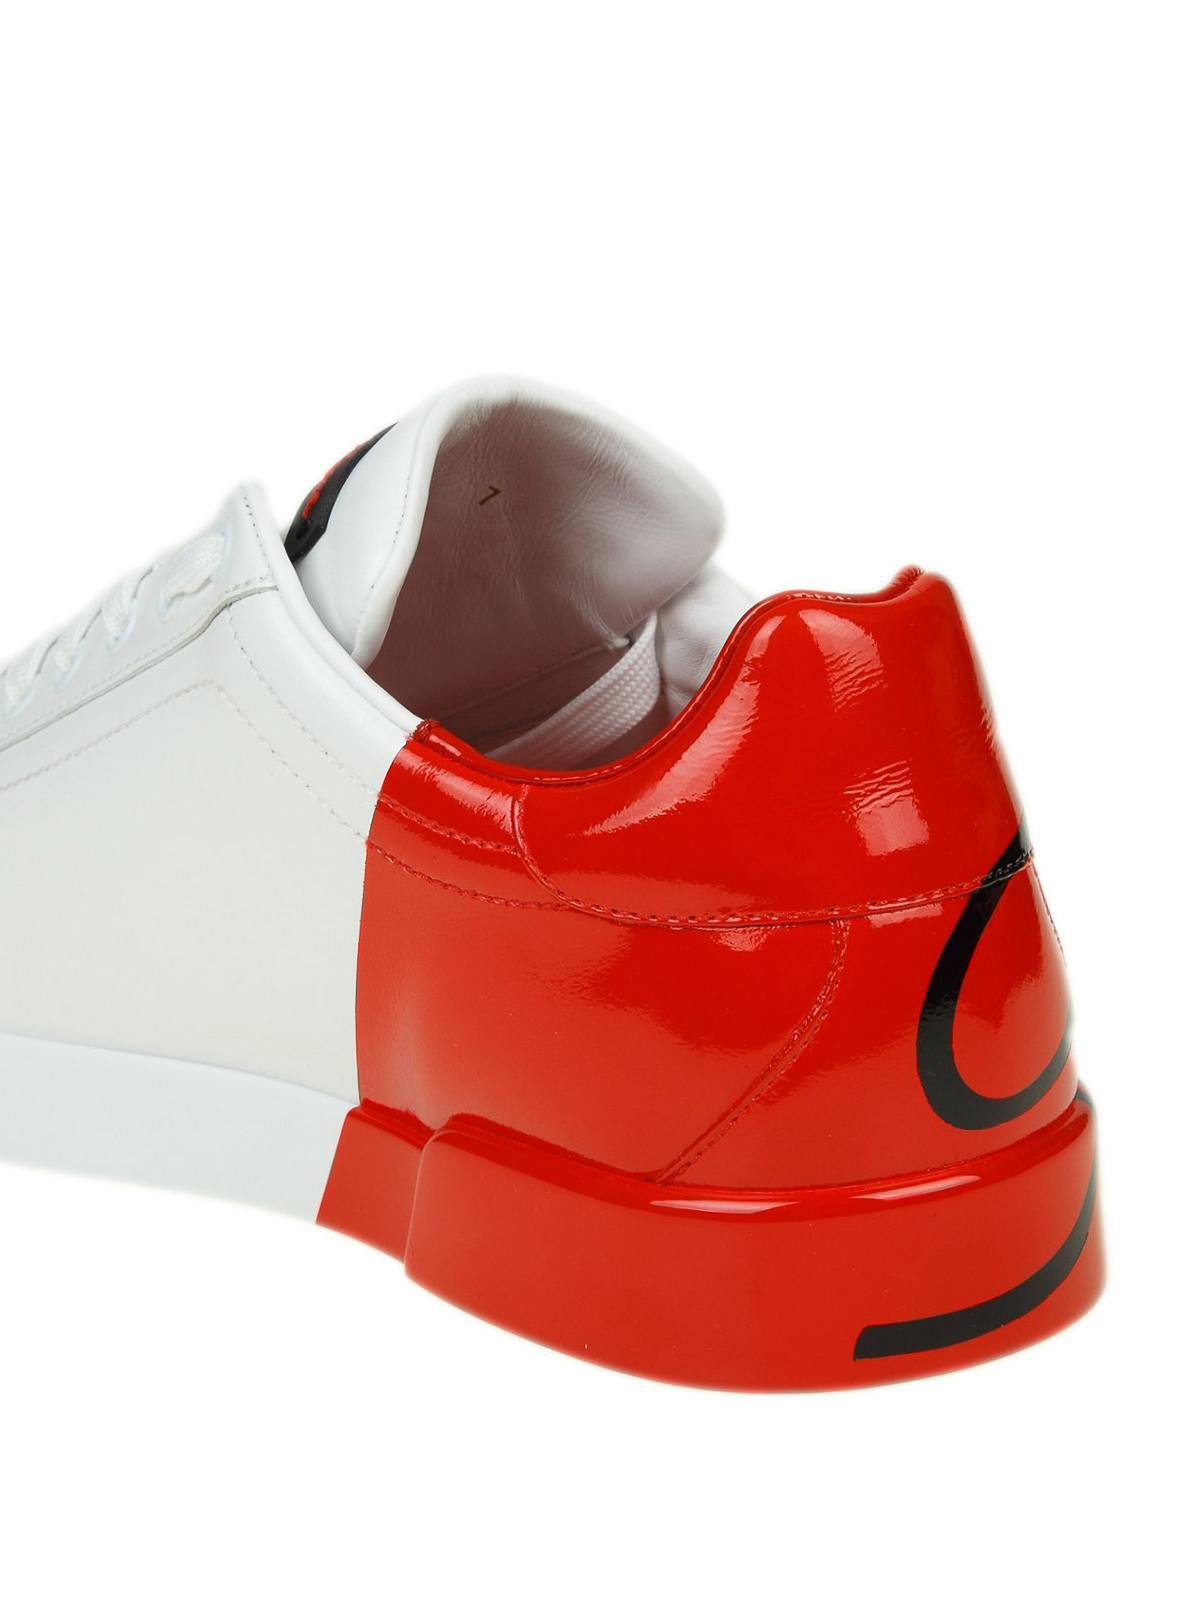 Trainers Dolce & Gabbana - Portofino white and red leather sneakers -  CS1600AI053HR821